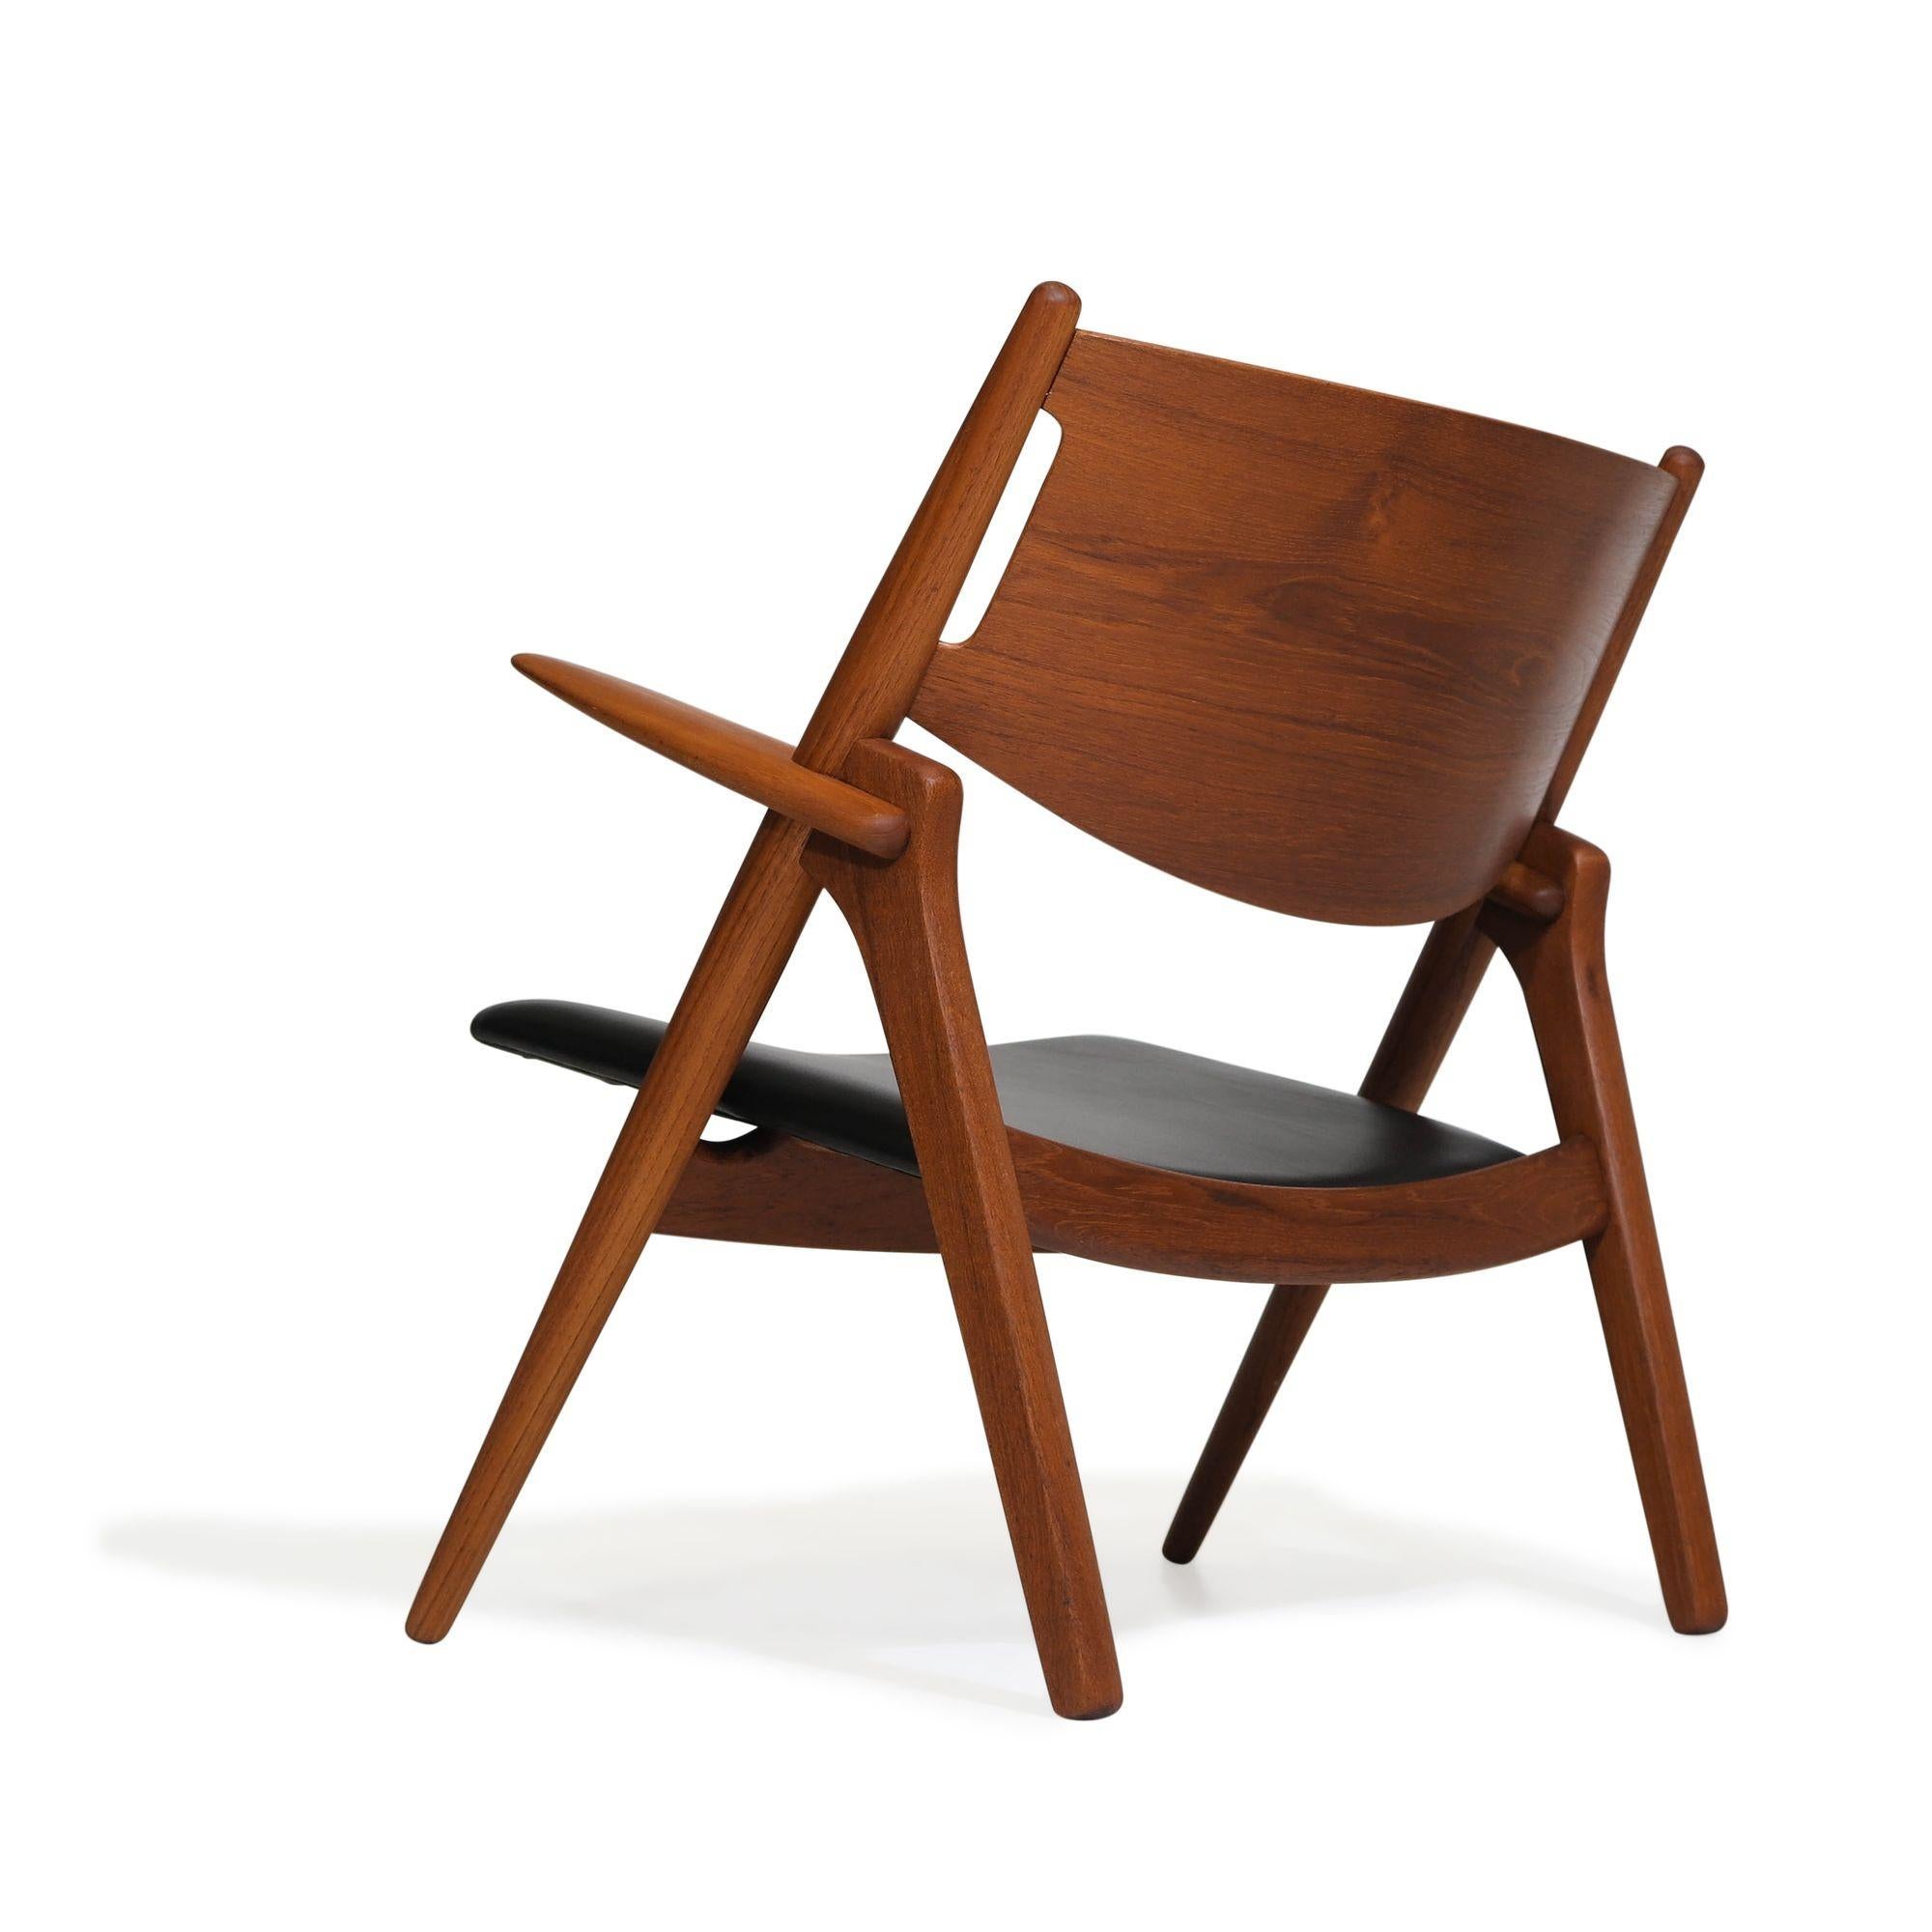 20th Century Pair of Sawbuck Chairs, CH28, by Hans Wegner, 1951